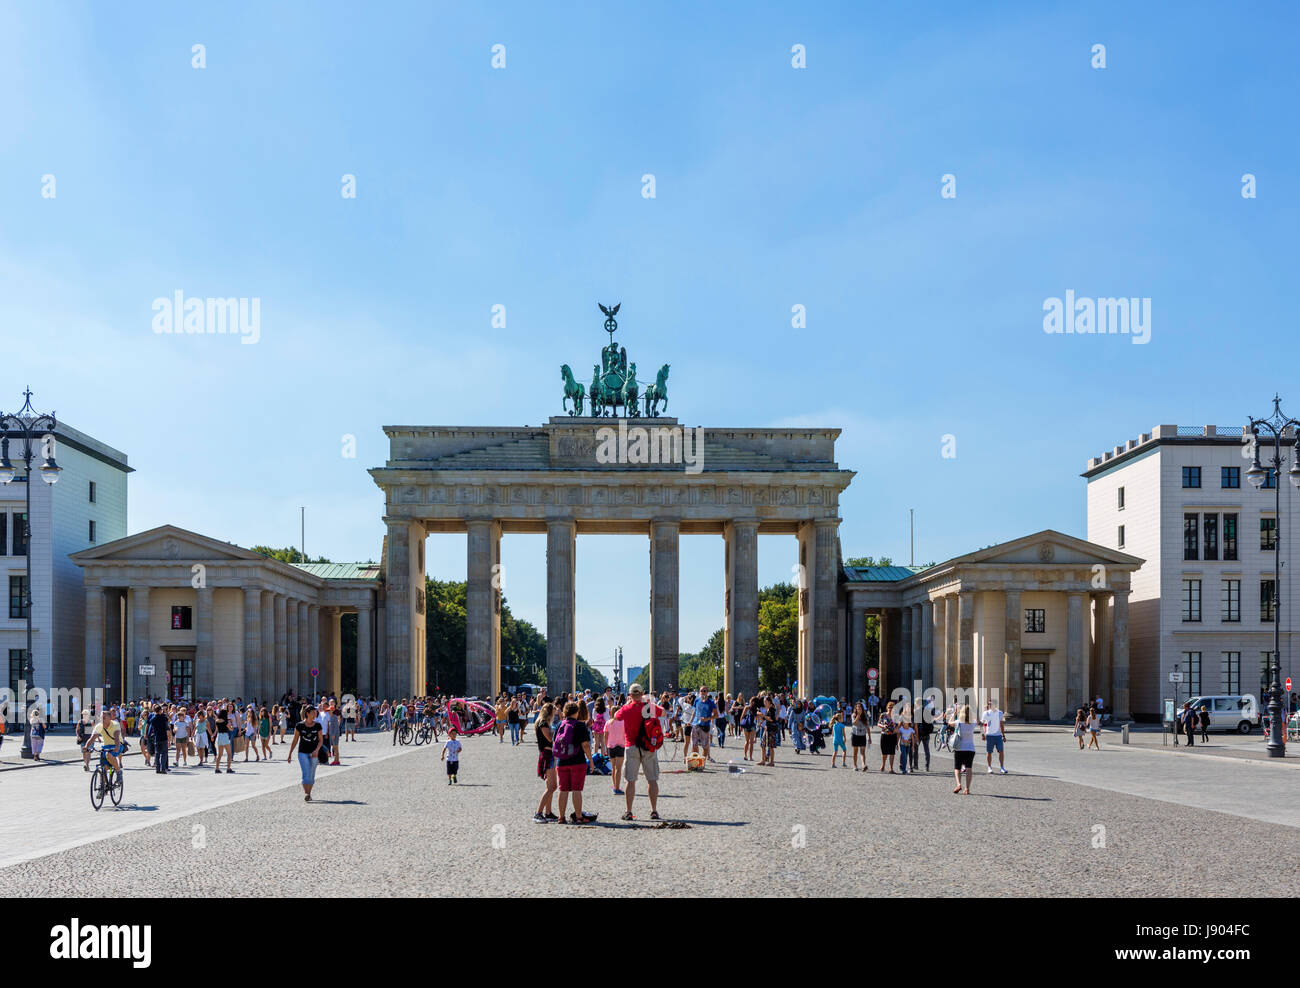 La Puerta de Brandenburgo (Brandenburger Tor) de la Pariser Platz, Mitte, Berlin, Alemania Foto de stock